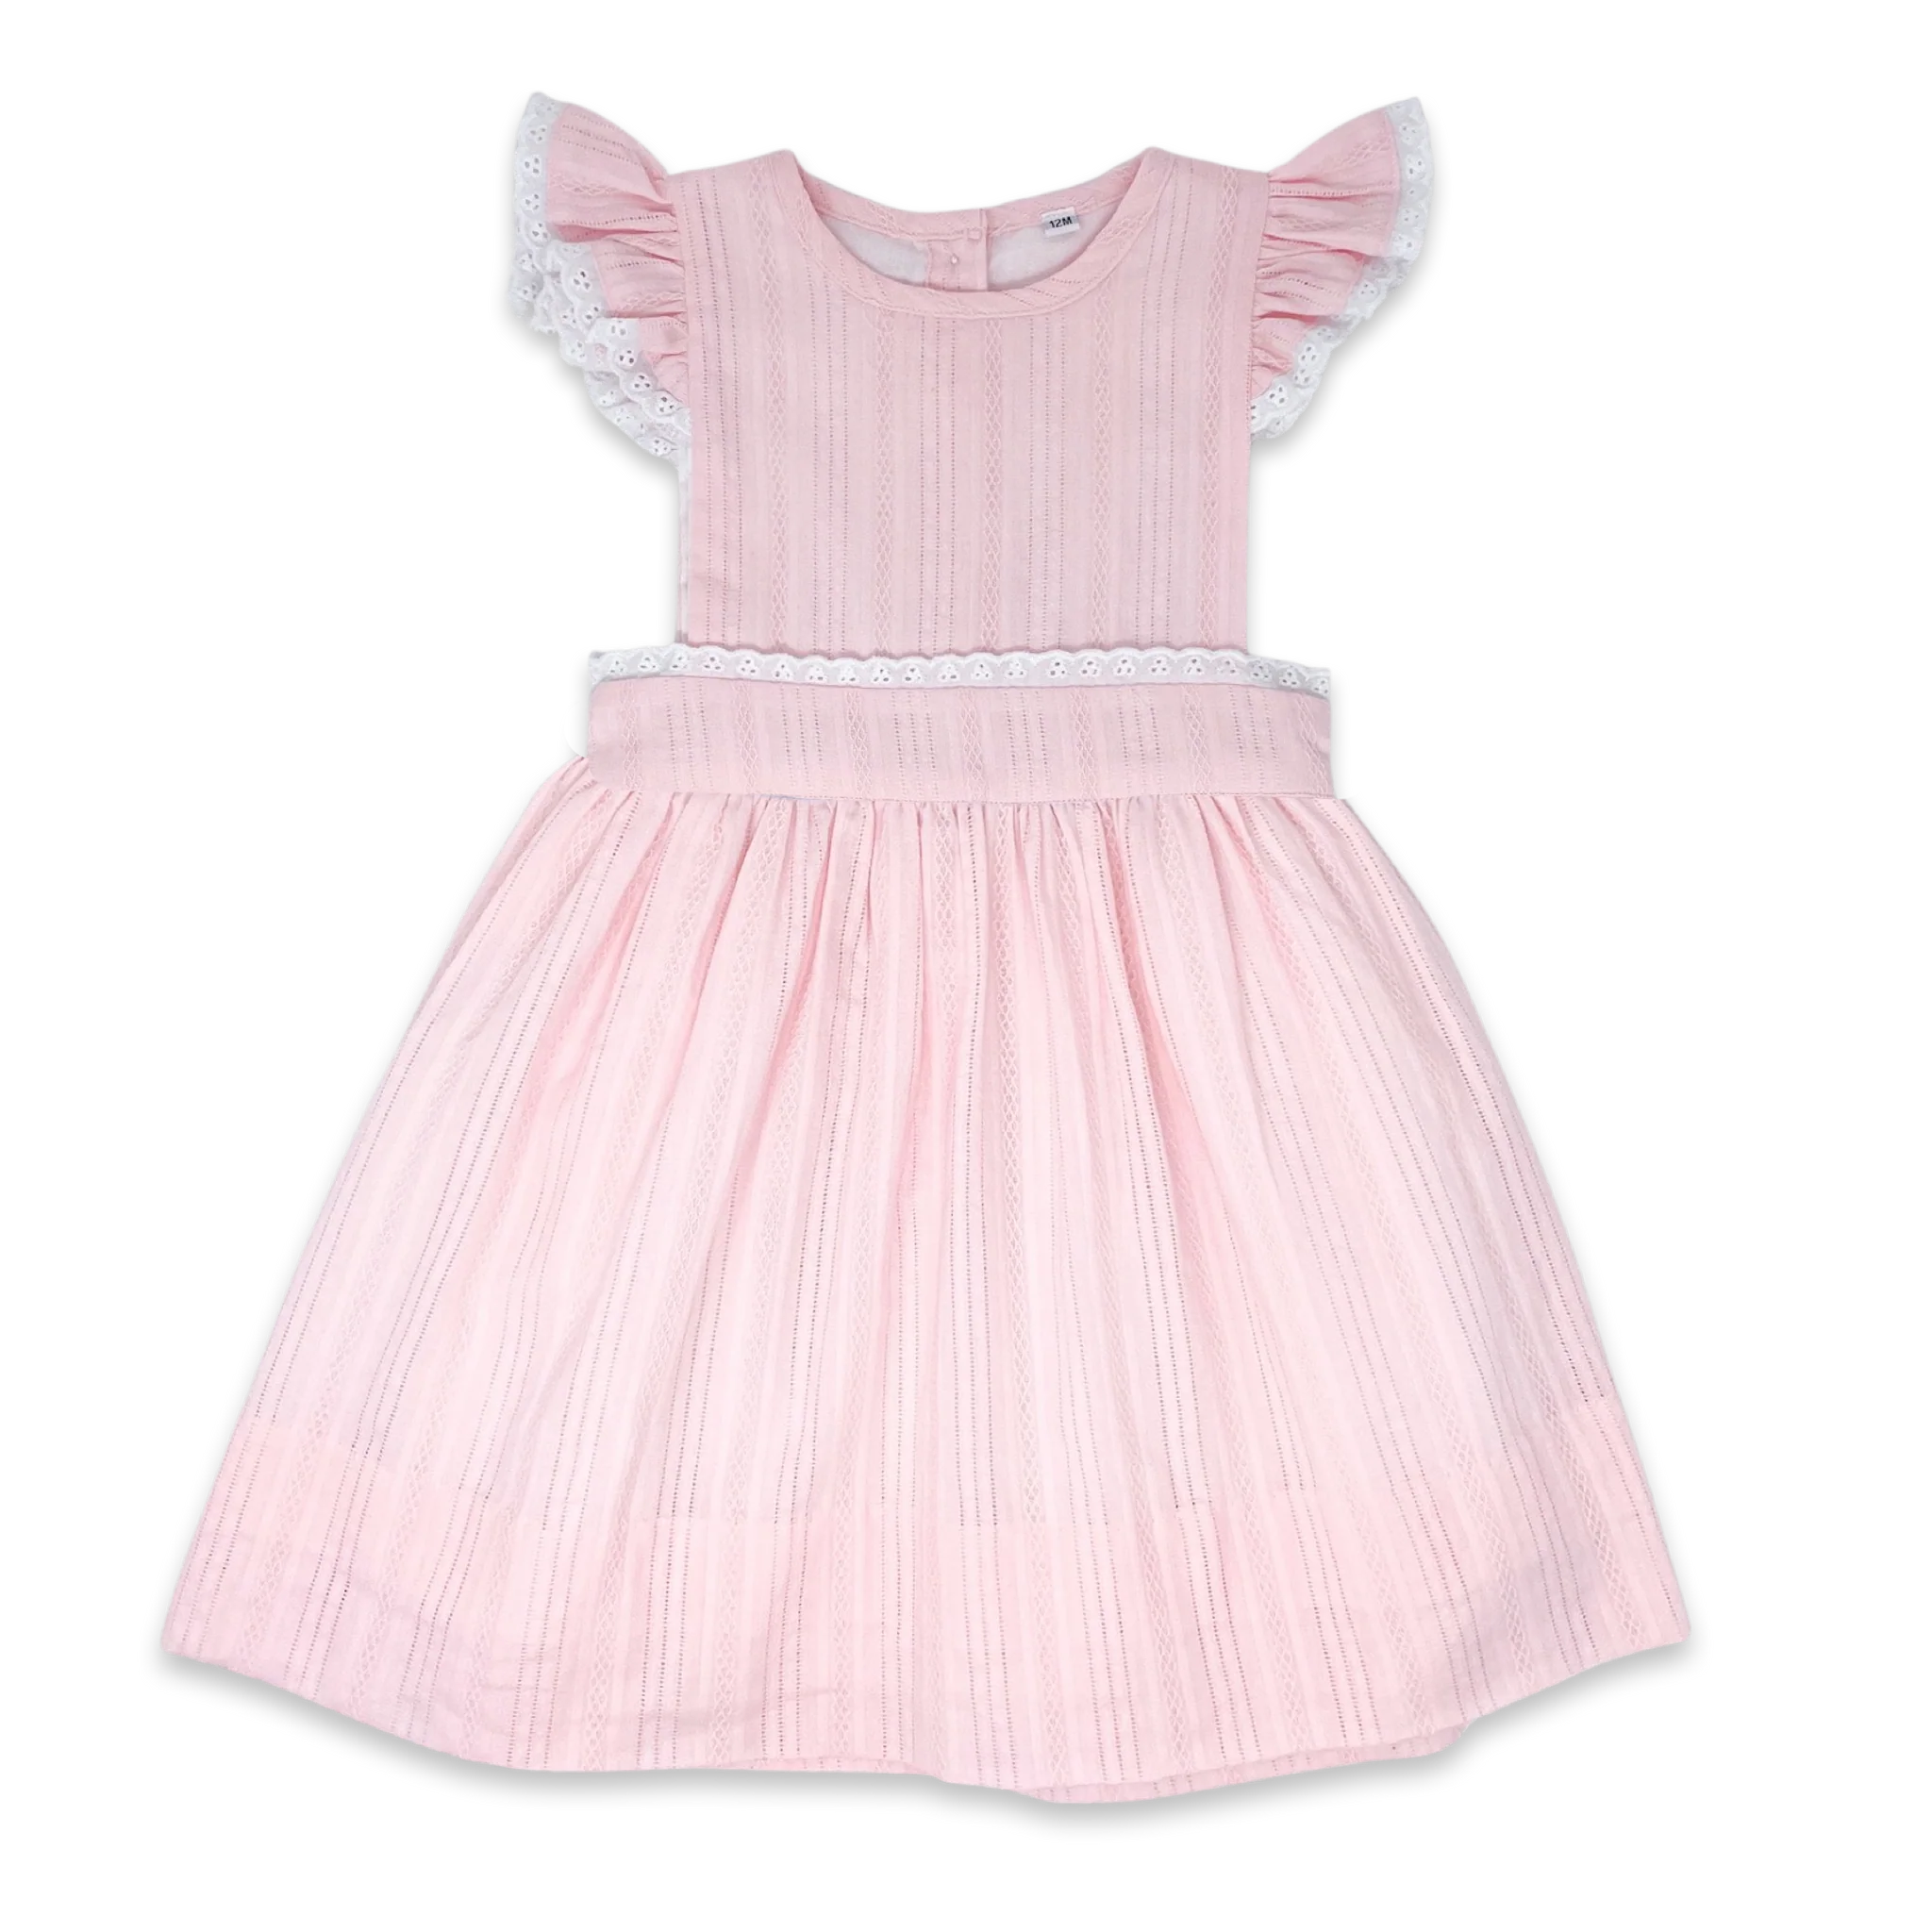 Pink Pinafore Dress